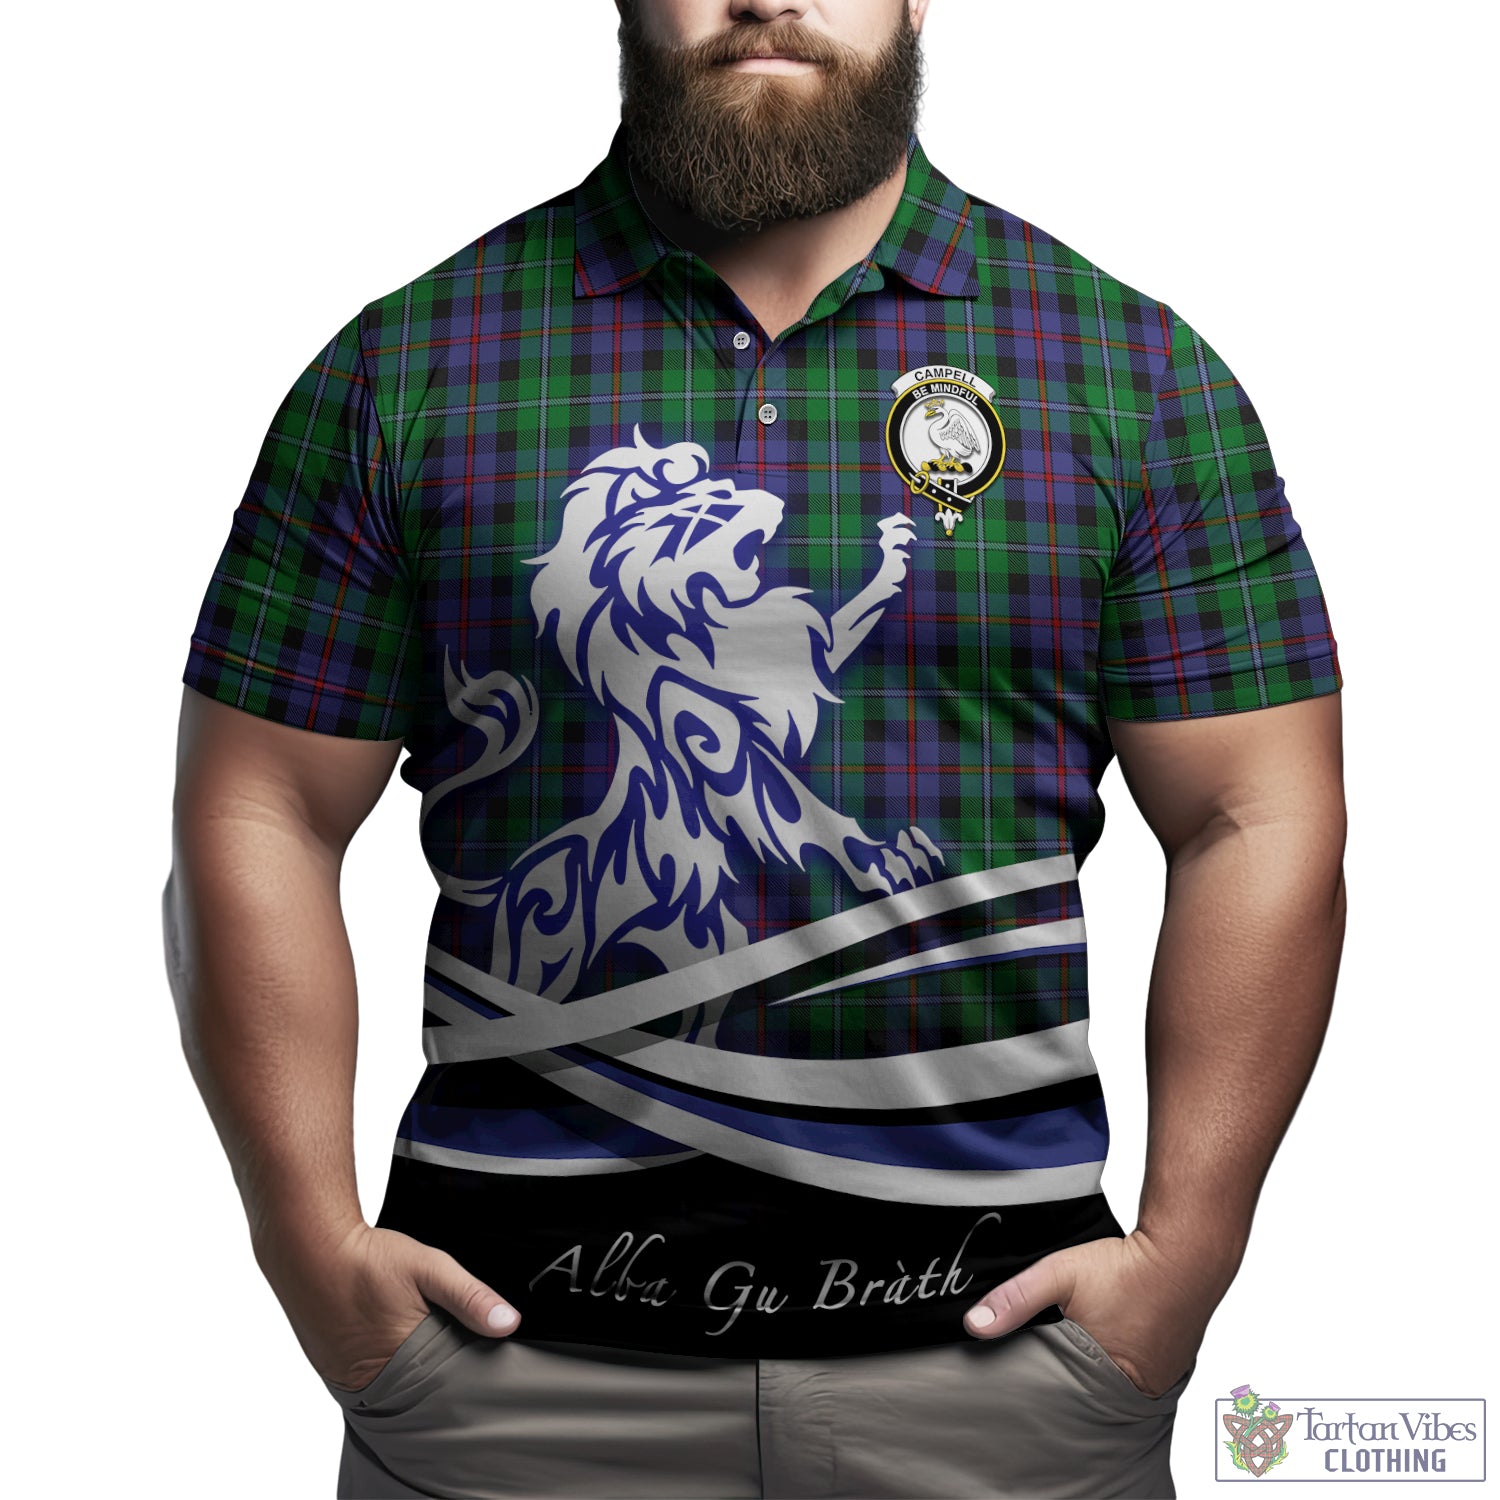 campbell-of-cawdor-tartan-polo-shirt-with-alba-gu-brath-regal-lion-emblem